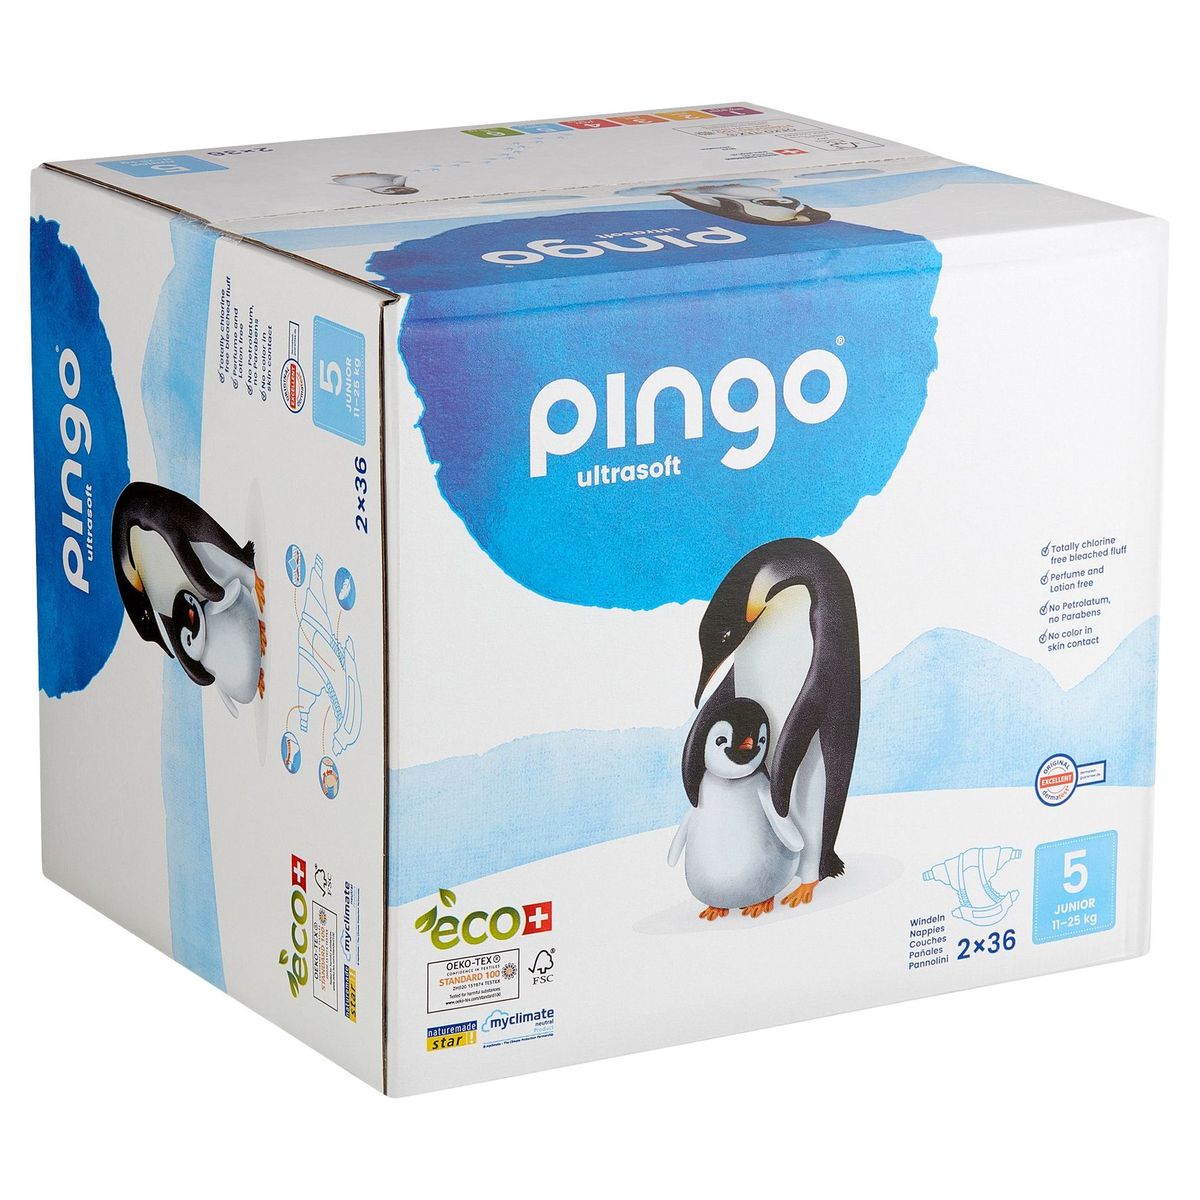 Pingo Ultrasoft 5 Junior 11-25 kg 2 x 36 Pièces